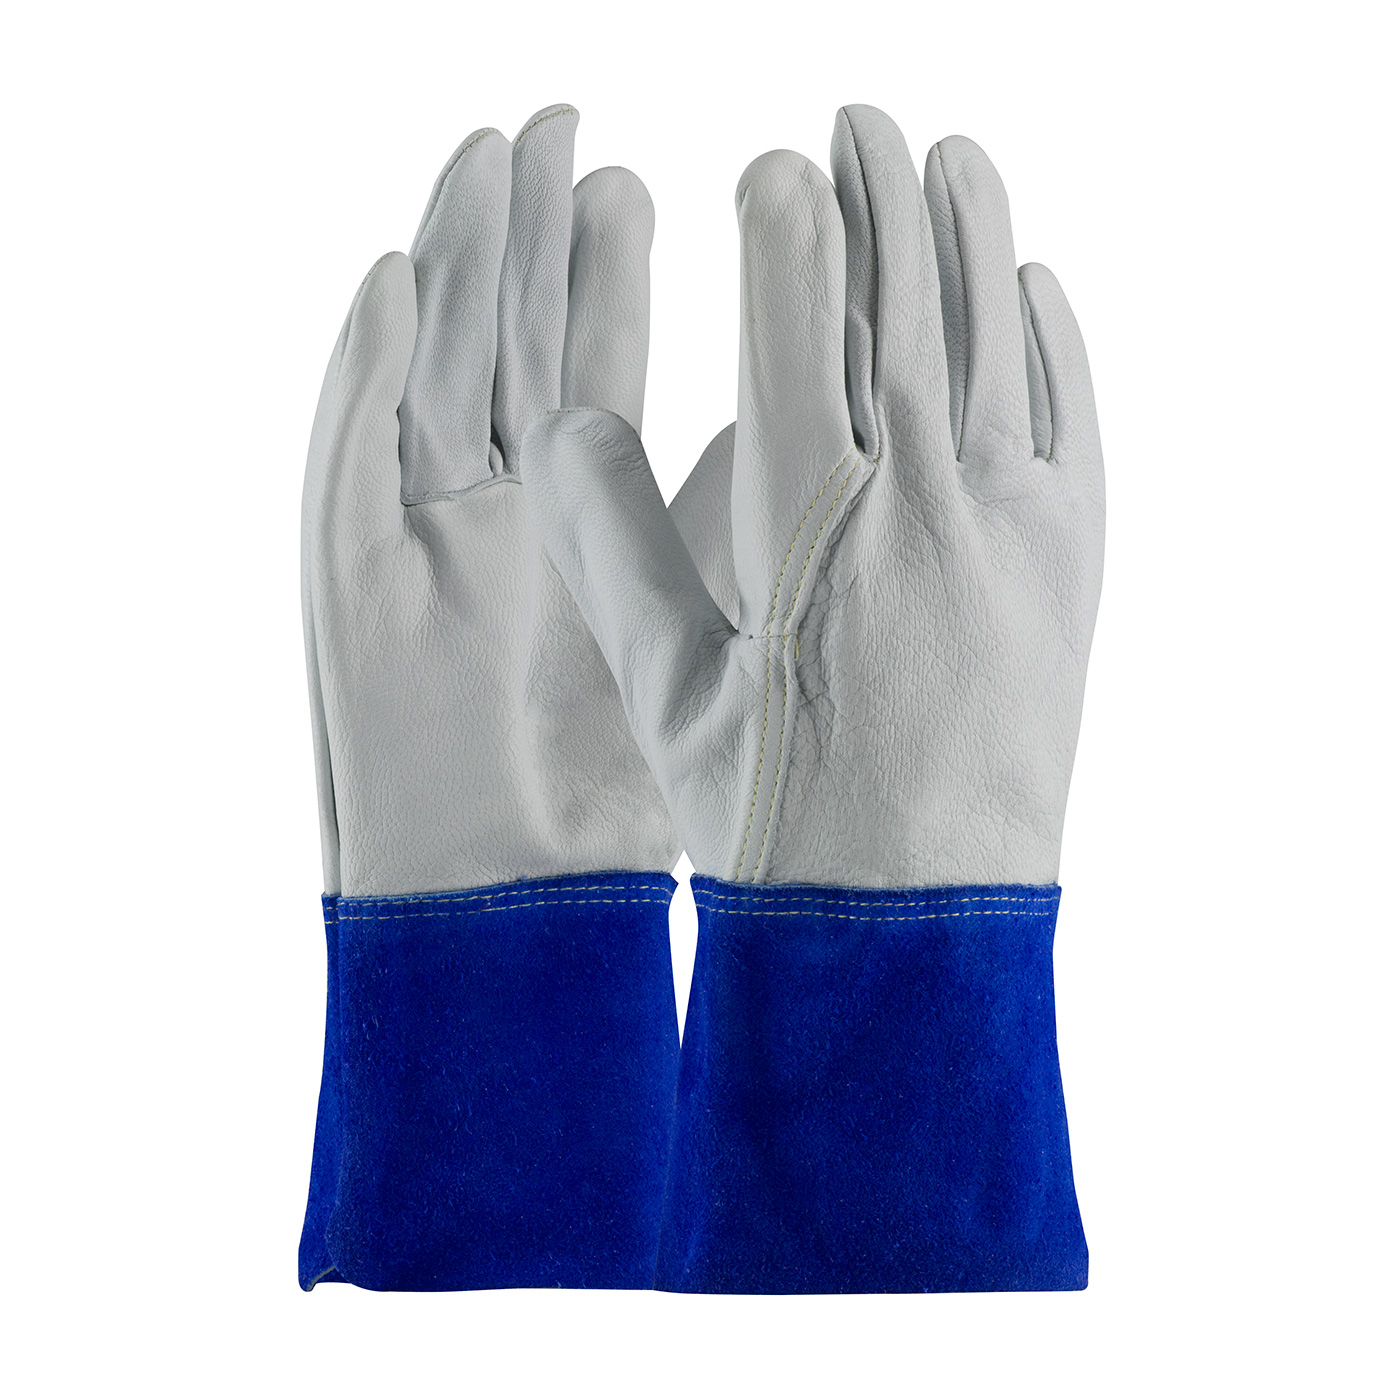 Majestic Glove 2120/12 Night Hawk Mechanics Gloves with Cowhide Palm